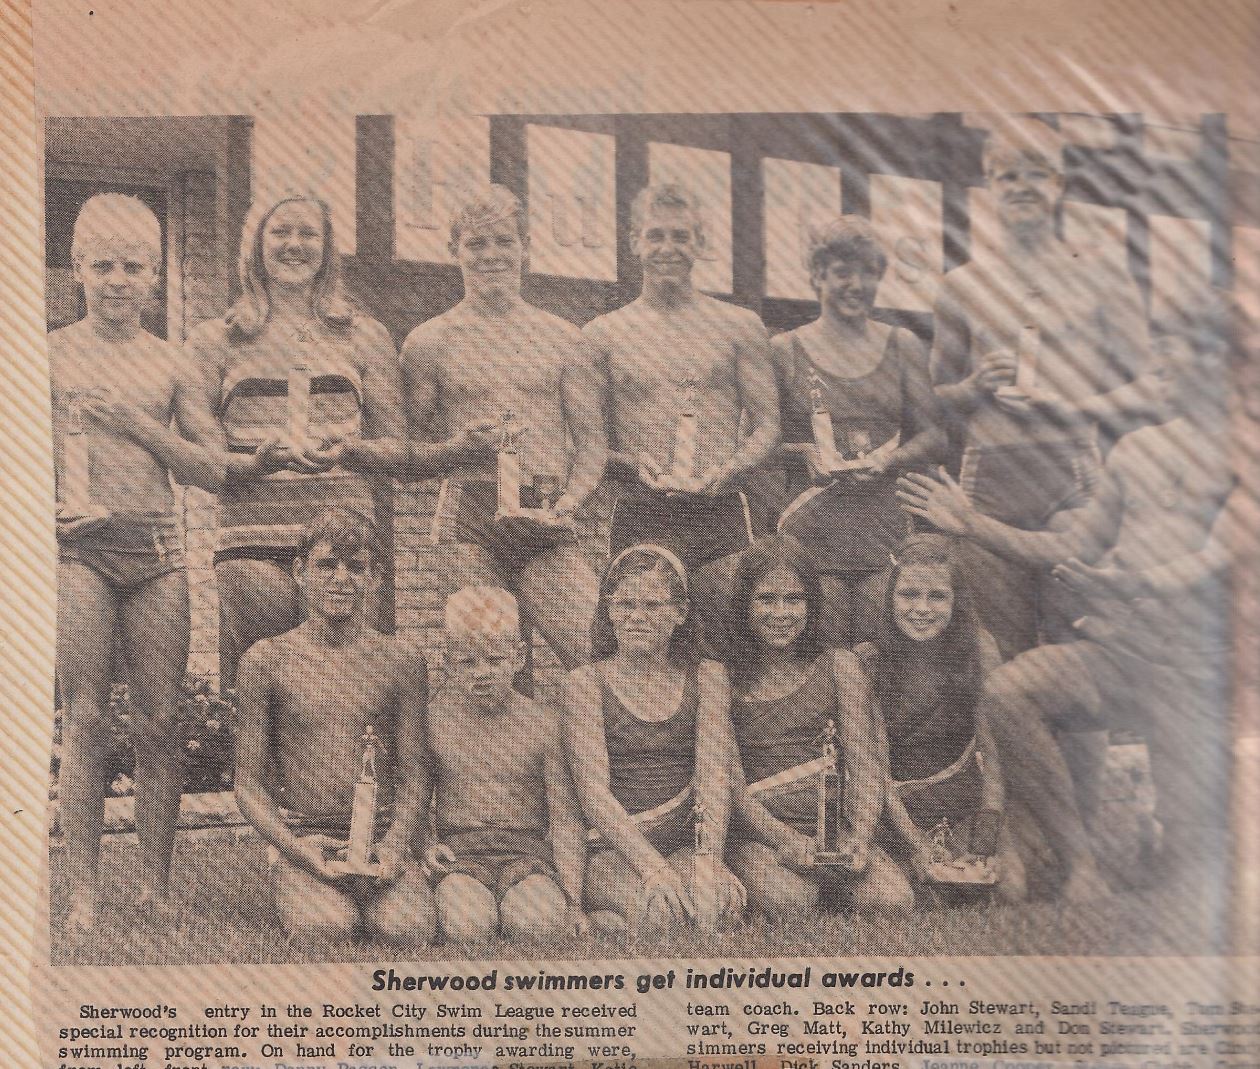 http://www.sherwoodswimclub.com/wp-content/uploads/2019/04/1968-sherwood-team-awards-Copy.jpg